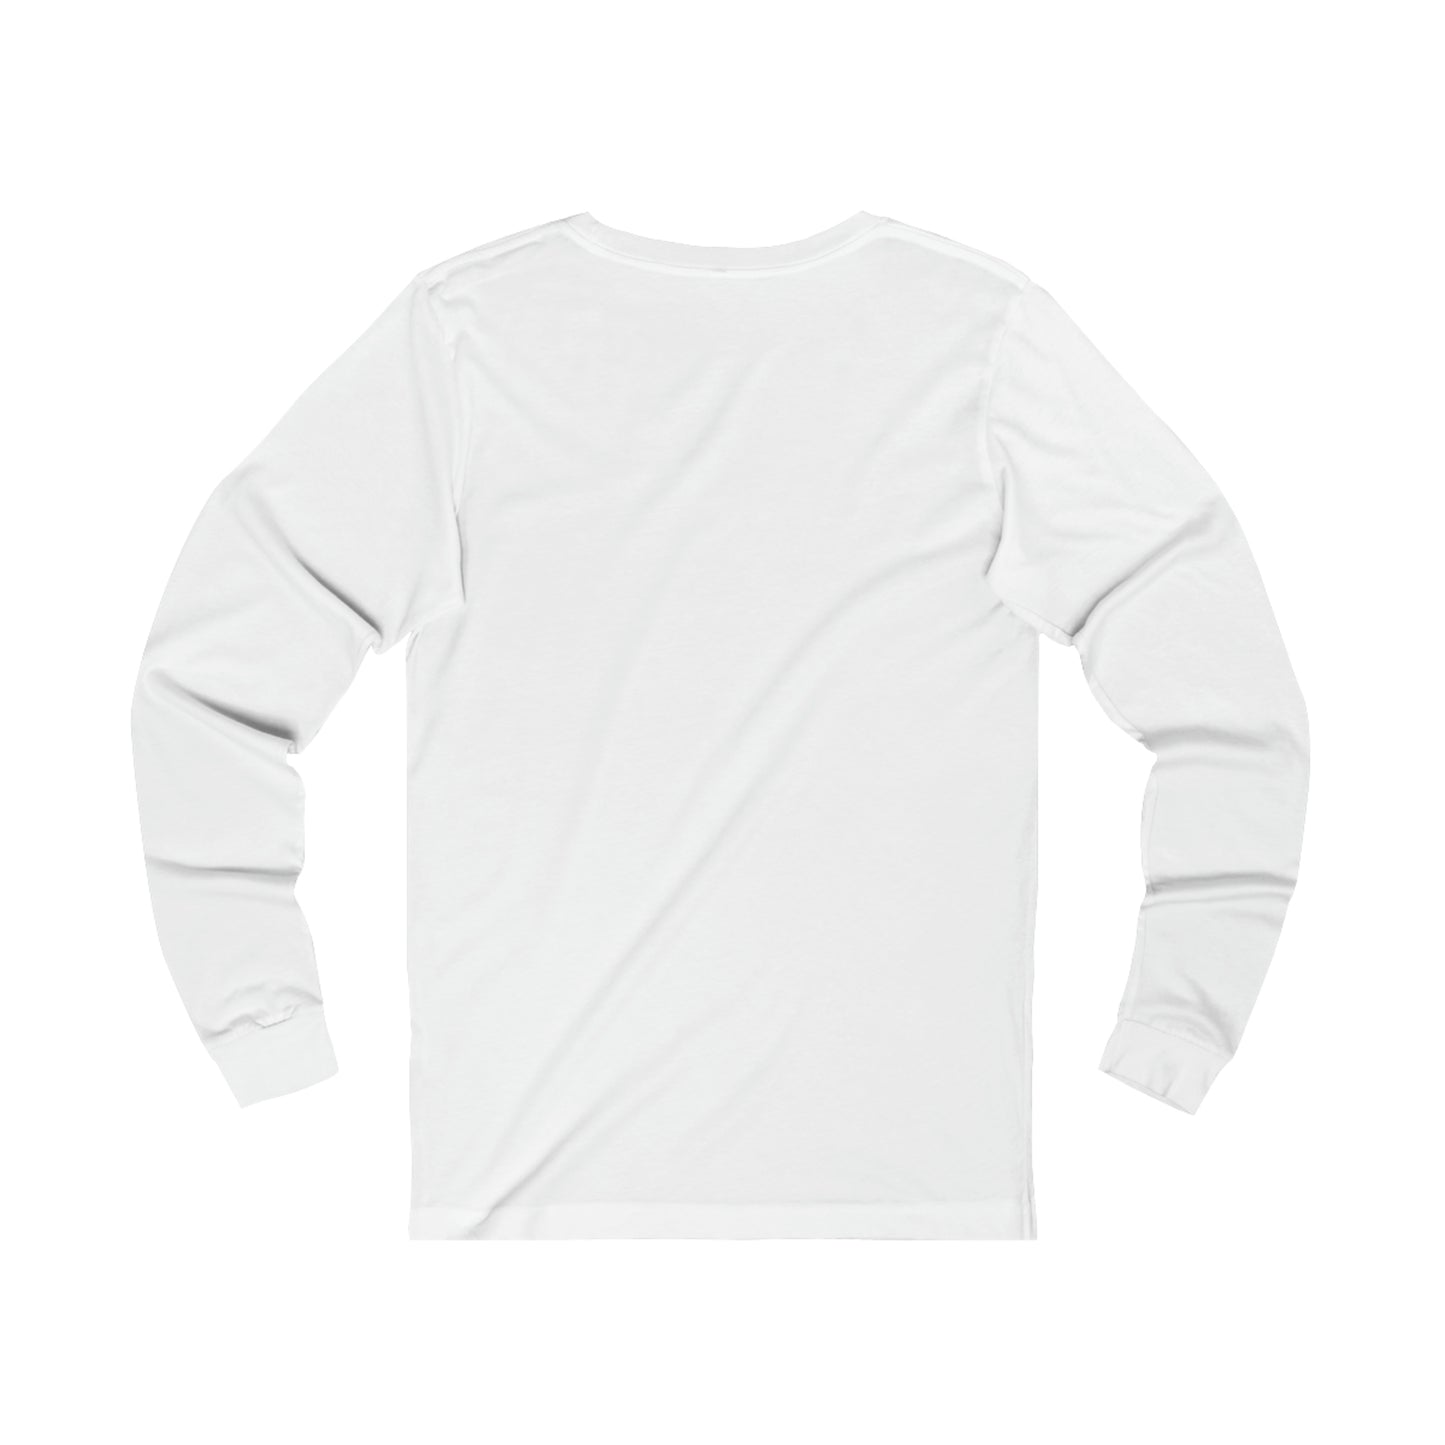 Colourful Apple - Unisex Long Sleeve T-Shirt